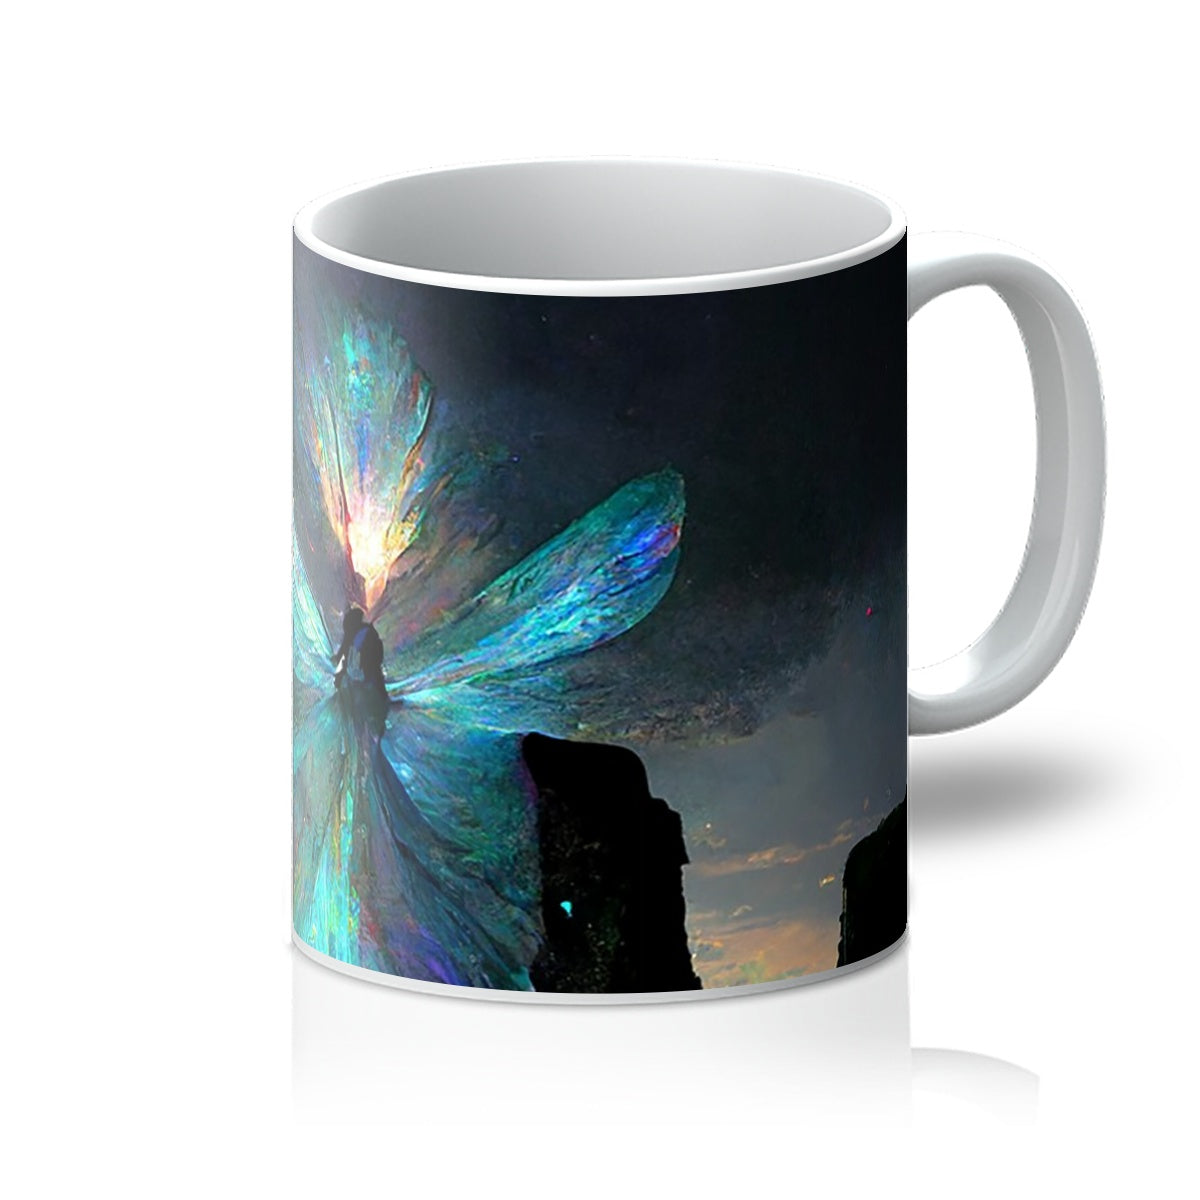 Iridescent energy fairy amongst ancient standing stones Mug